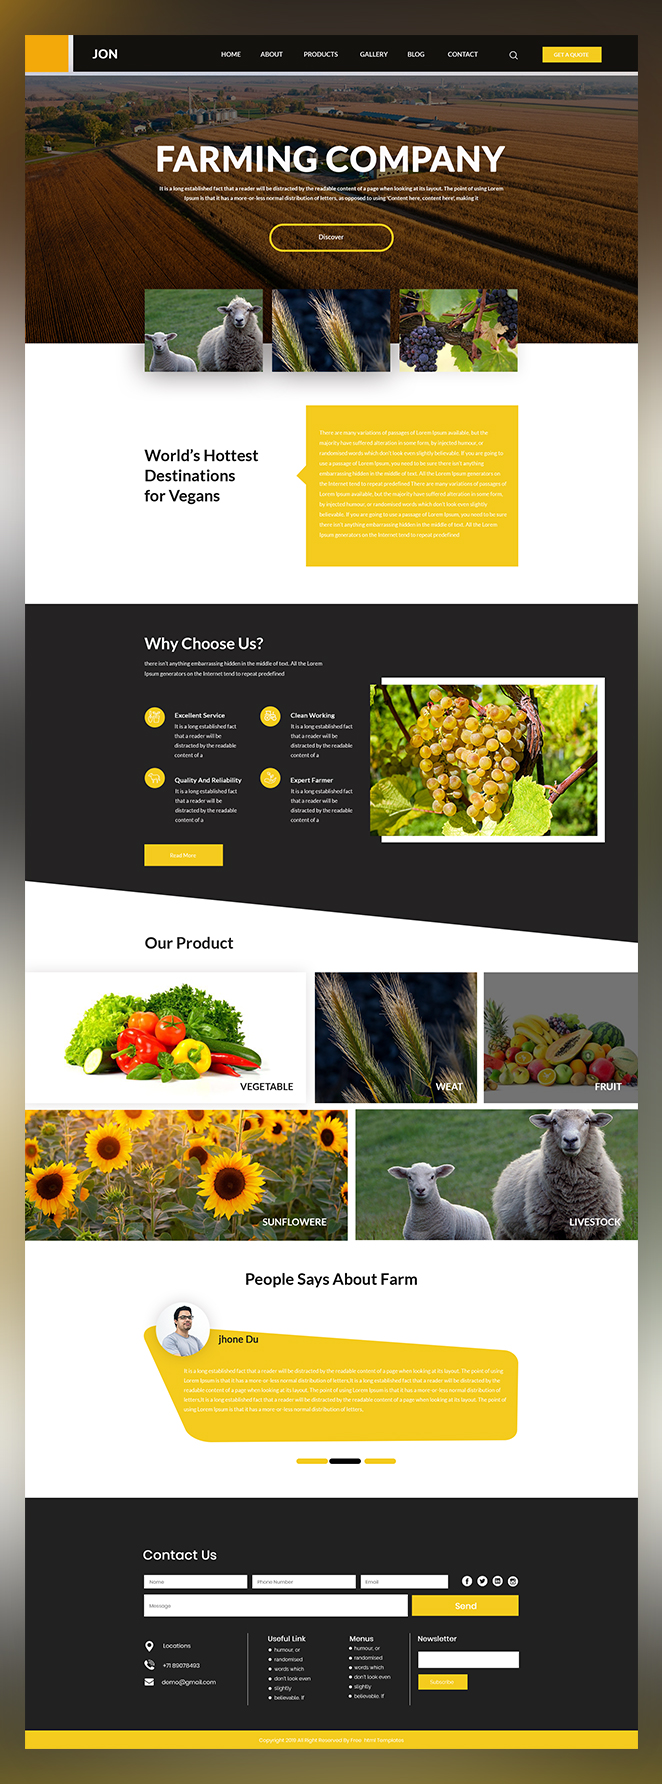 Jon farming Wwebsite psd template